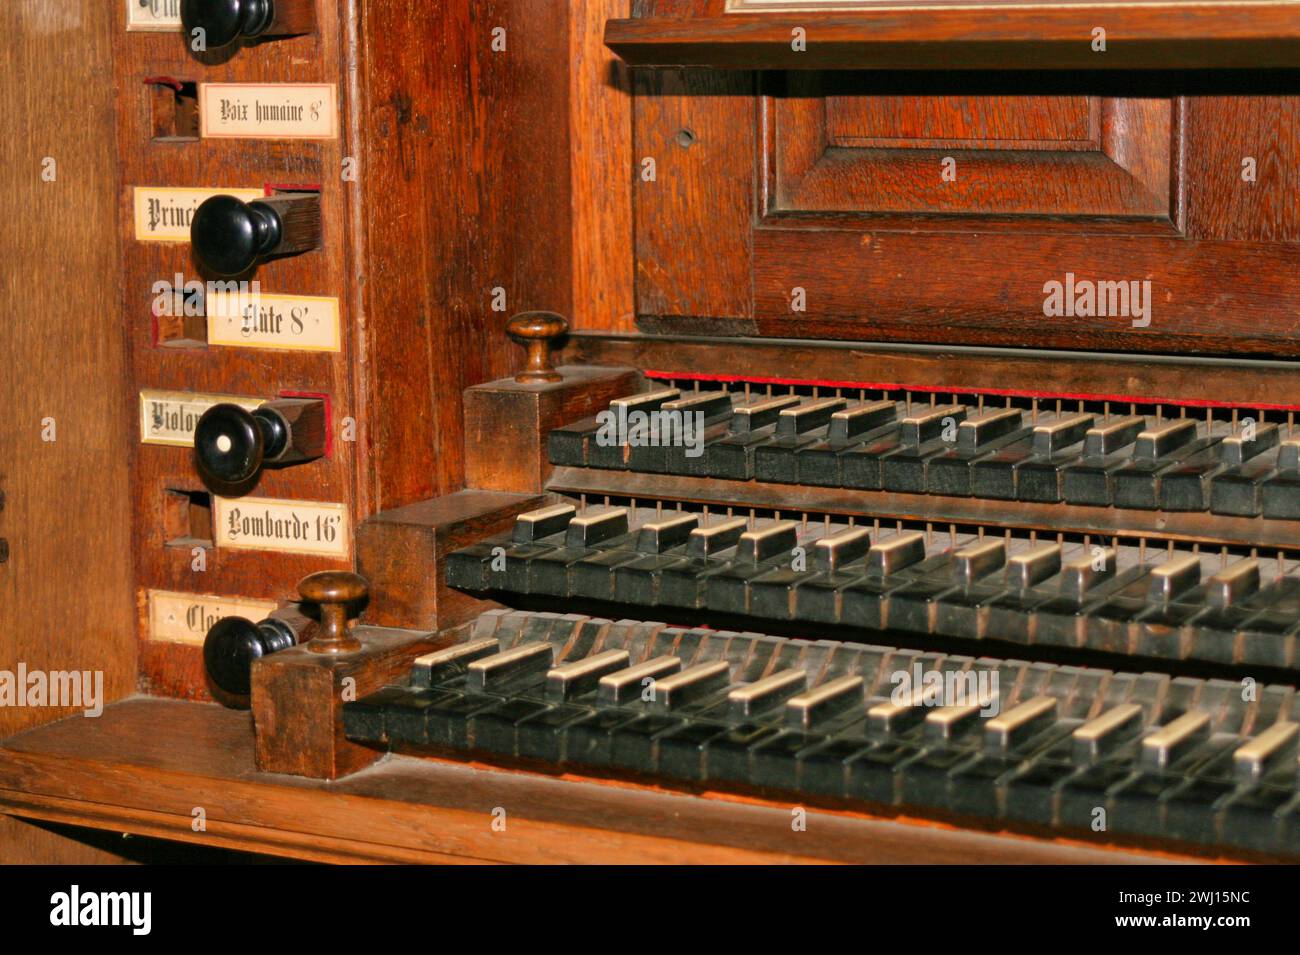 Organ in the Protestant Church of St. Thomas in Strasbourg Stock Photo